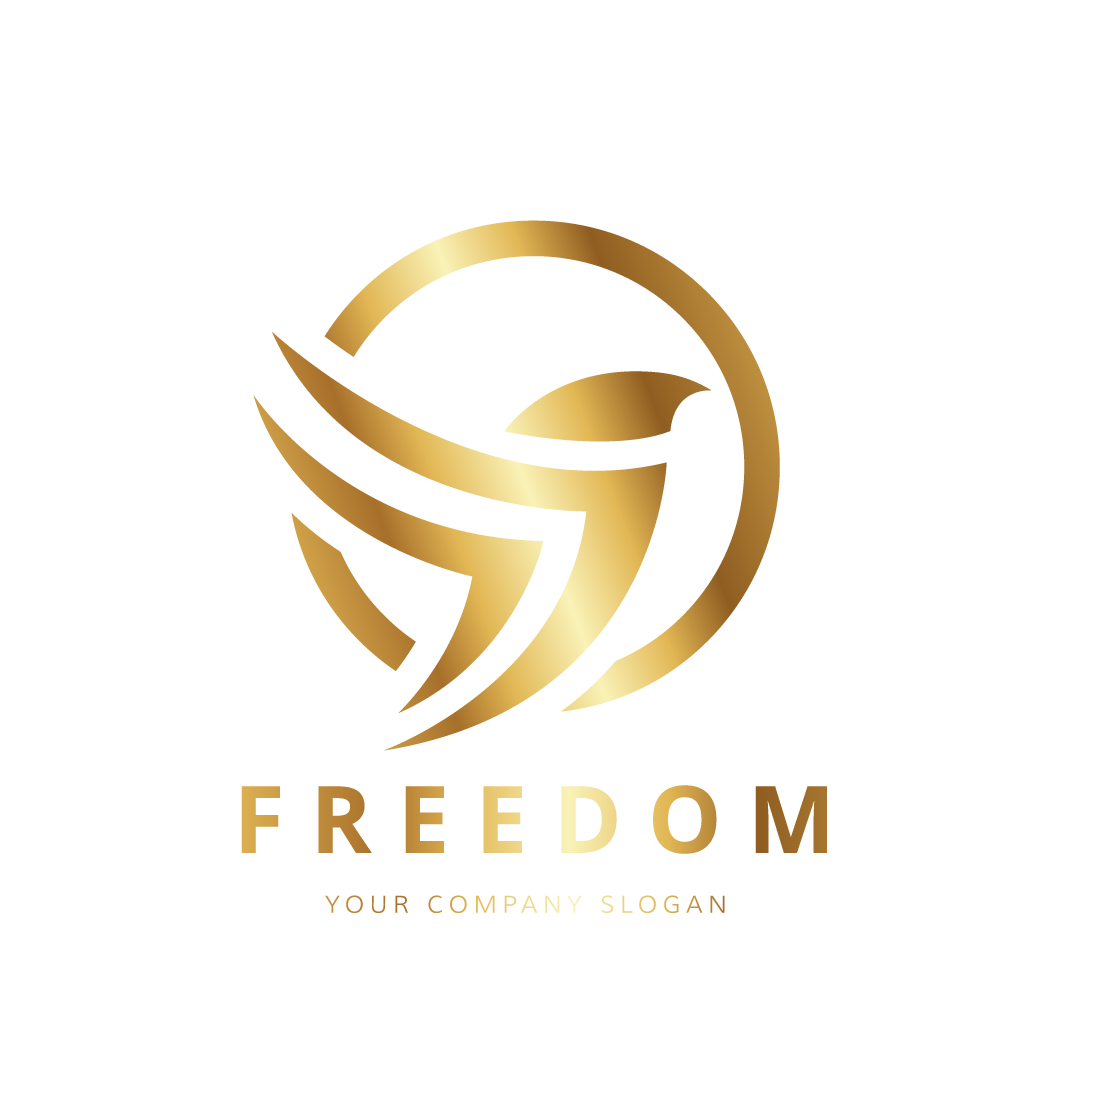 Golden logo design modern logo maker - FiverrBox